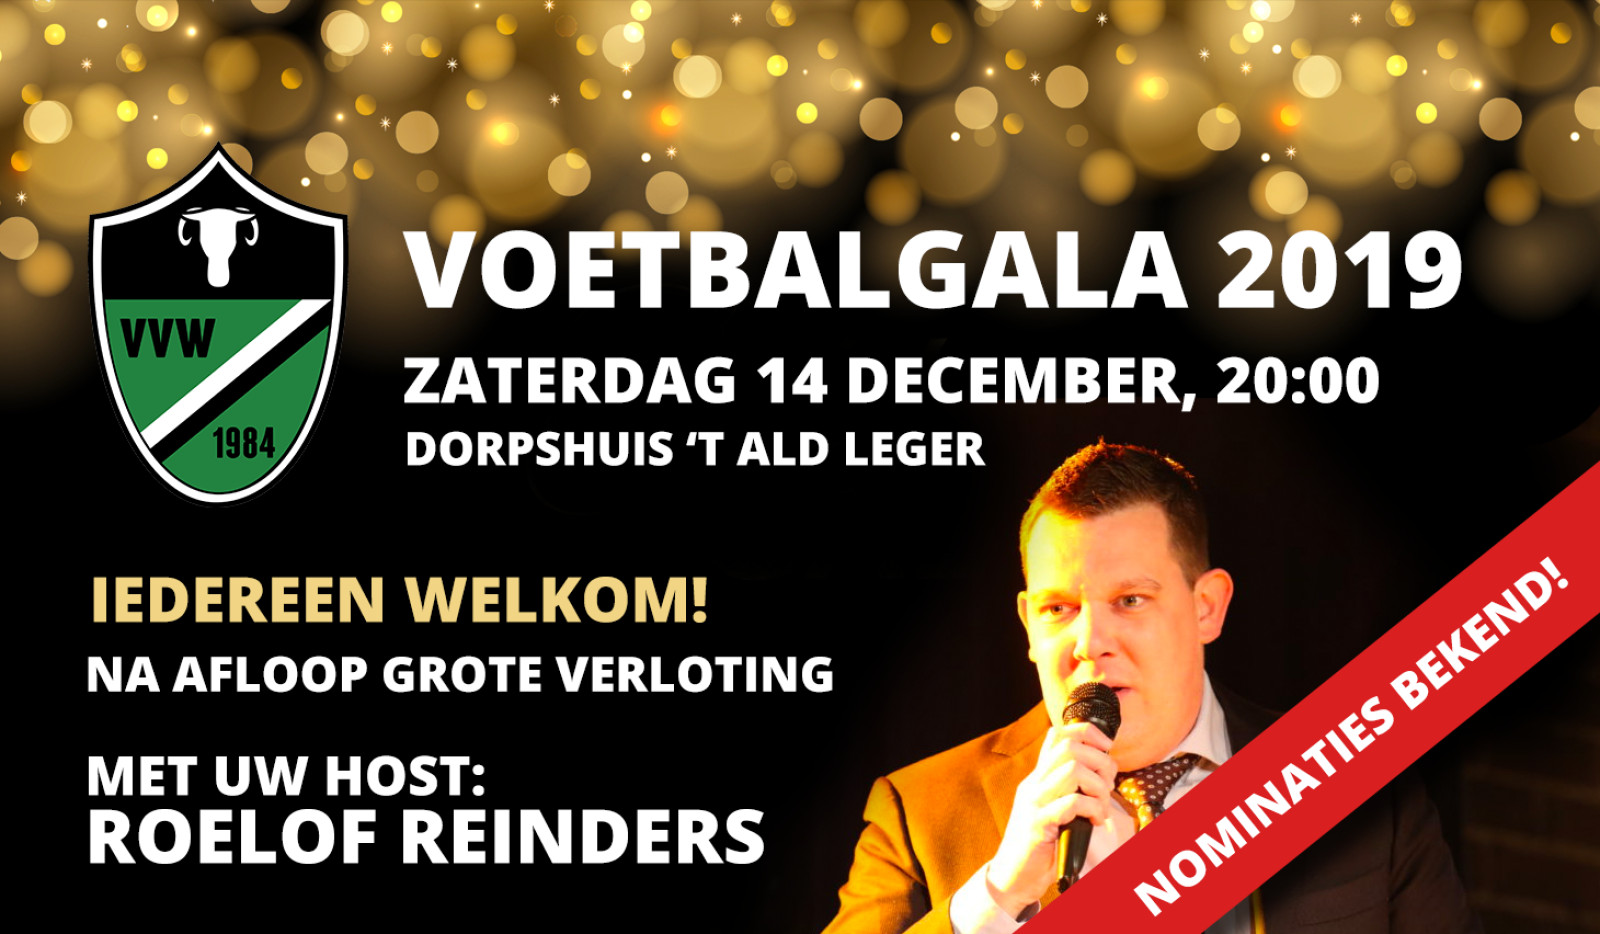 Nominaties Voetbalgala 2019 bekend, stem nu op je favoriet!